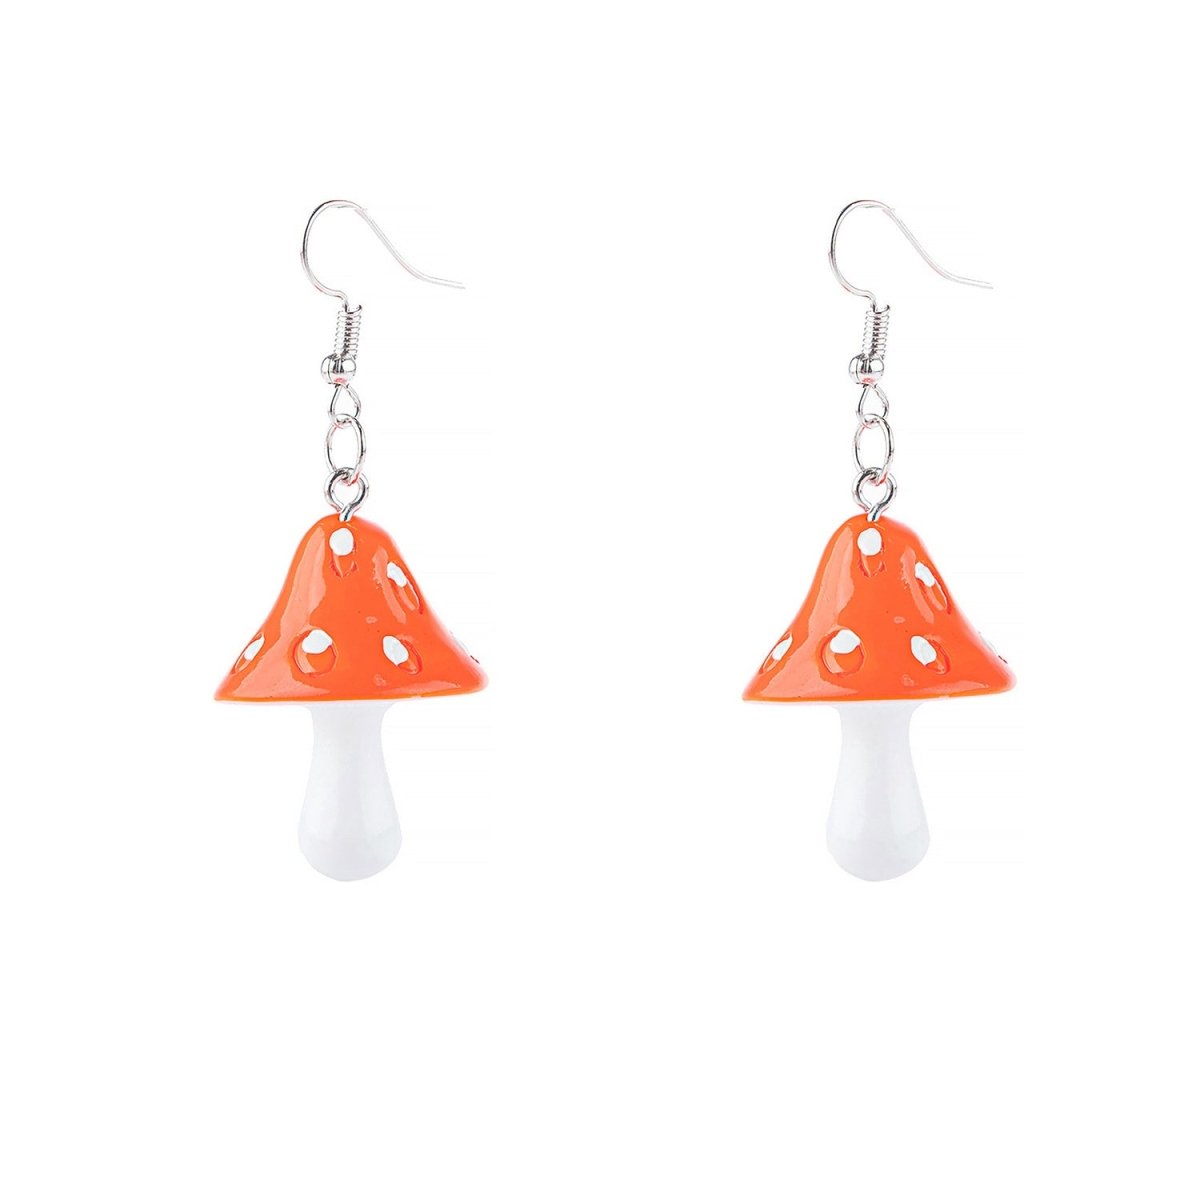 Quirky Mushroom Earrings - cherrykittenQuirky Mushroom Earrings